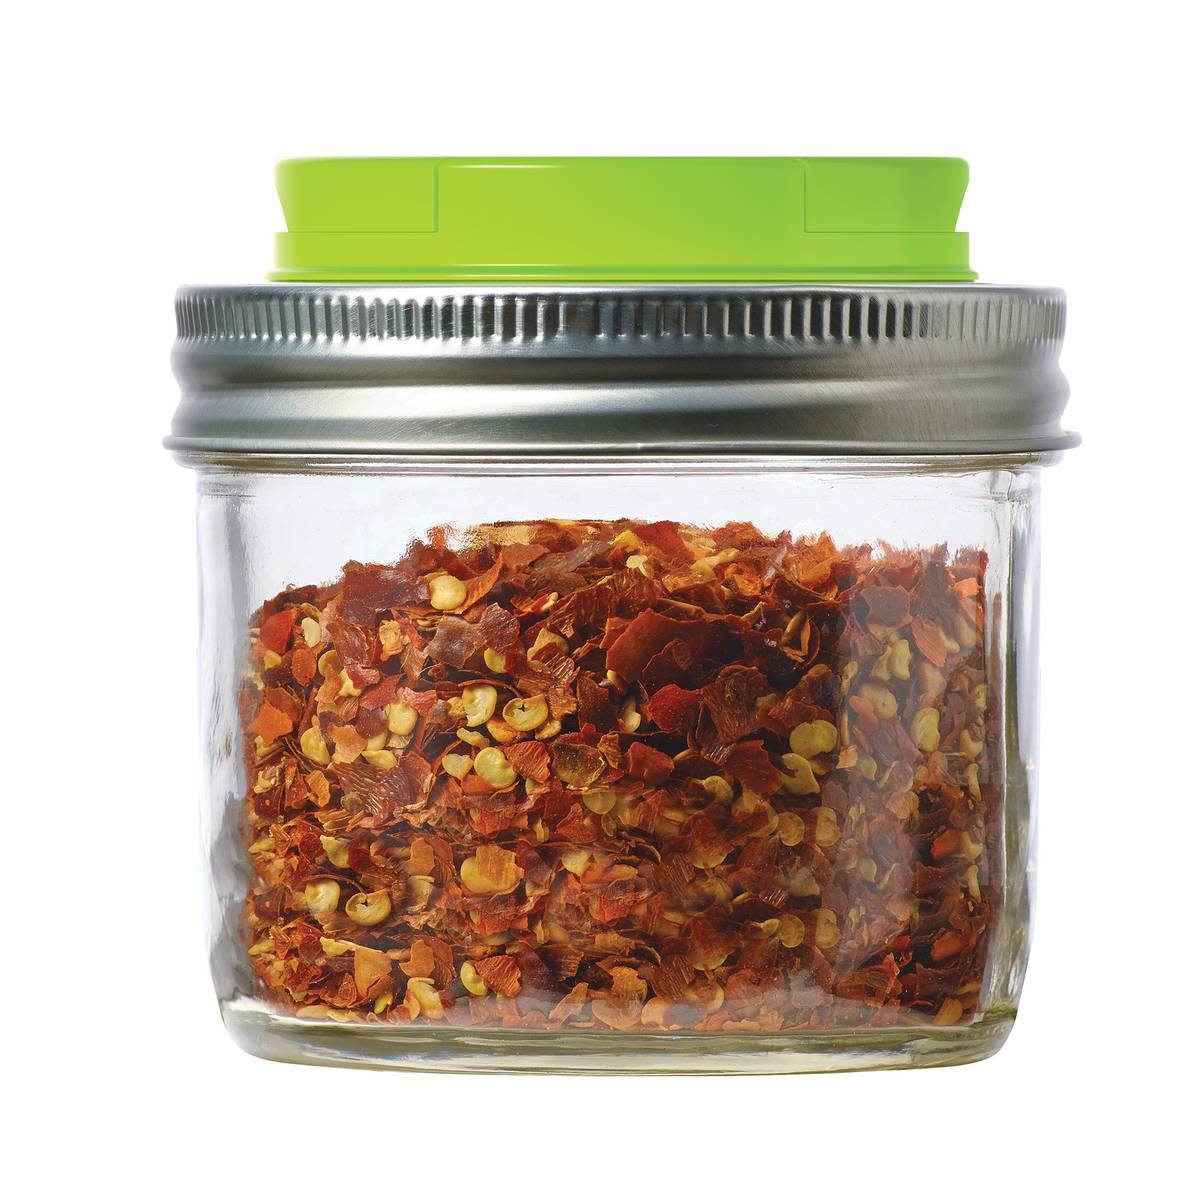 Jarware Spice Lids- Jar Attachment